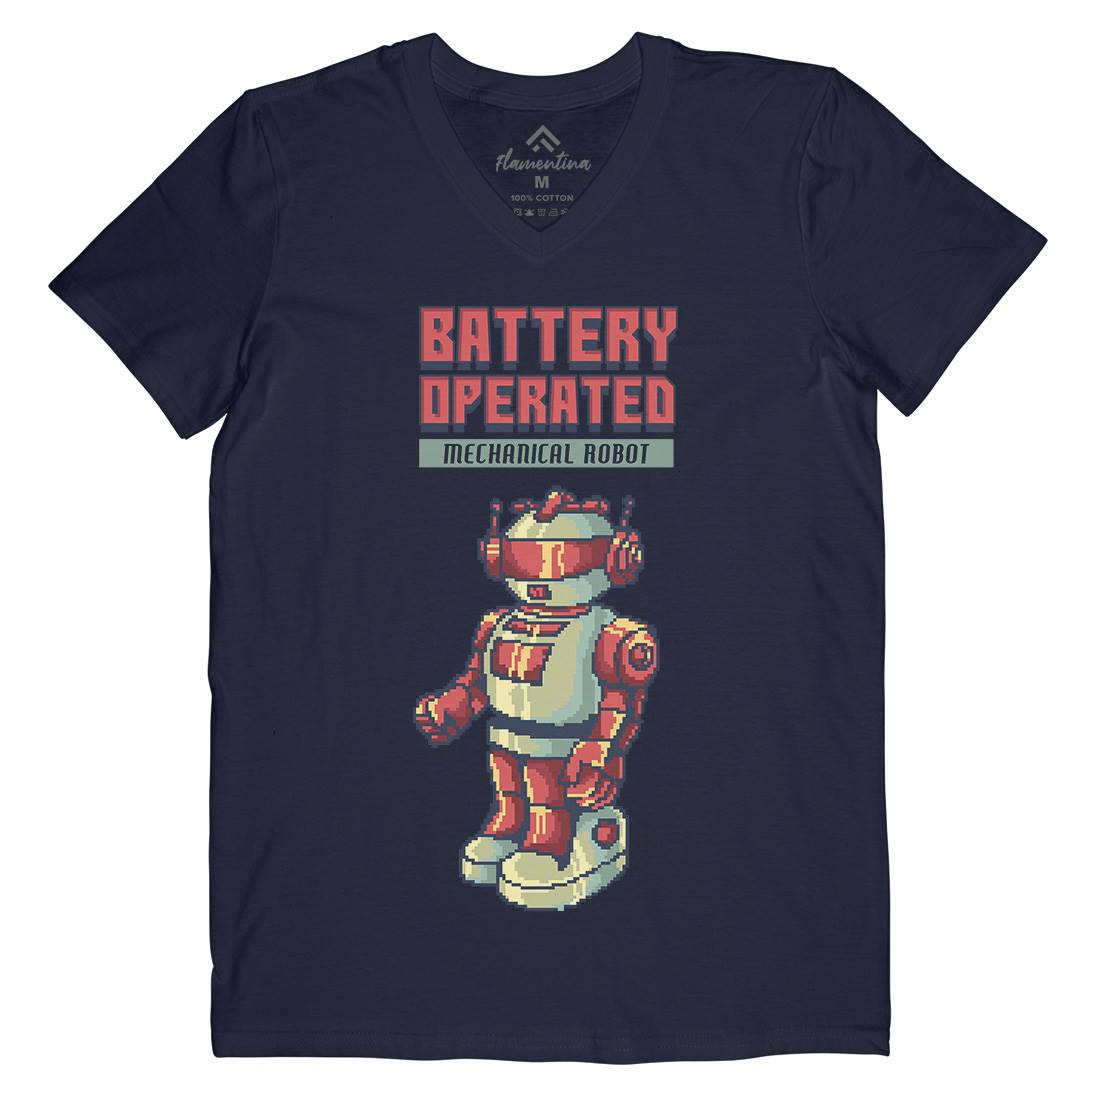 Vintages Robot Mens V-Neck T-Shirt Retro B977